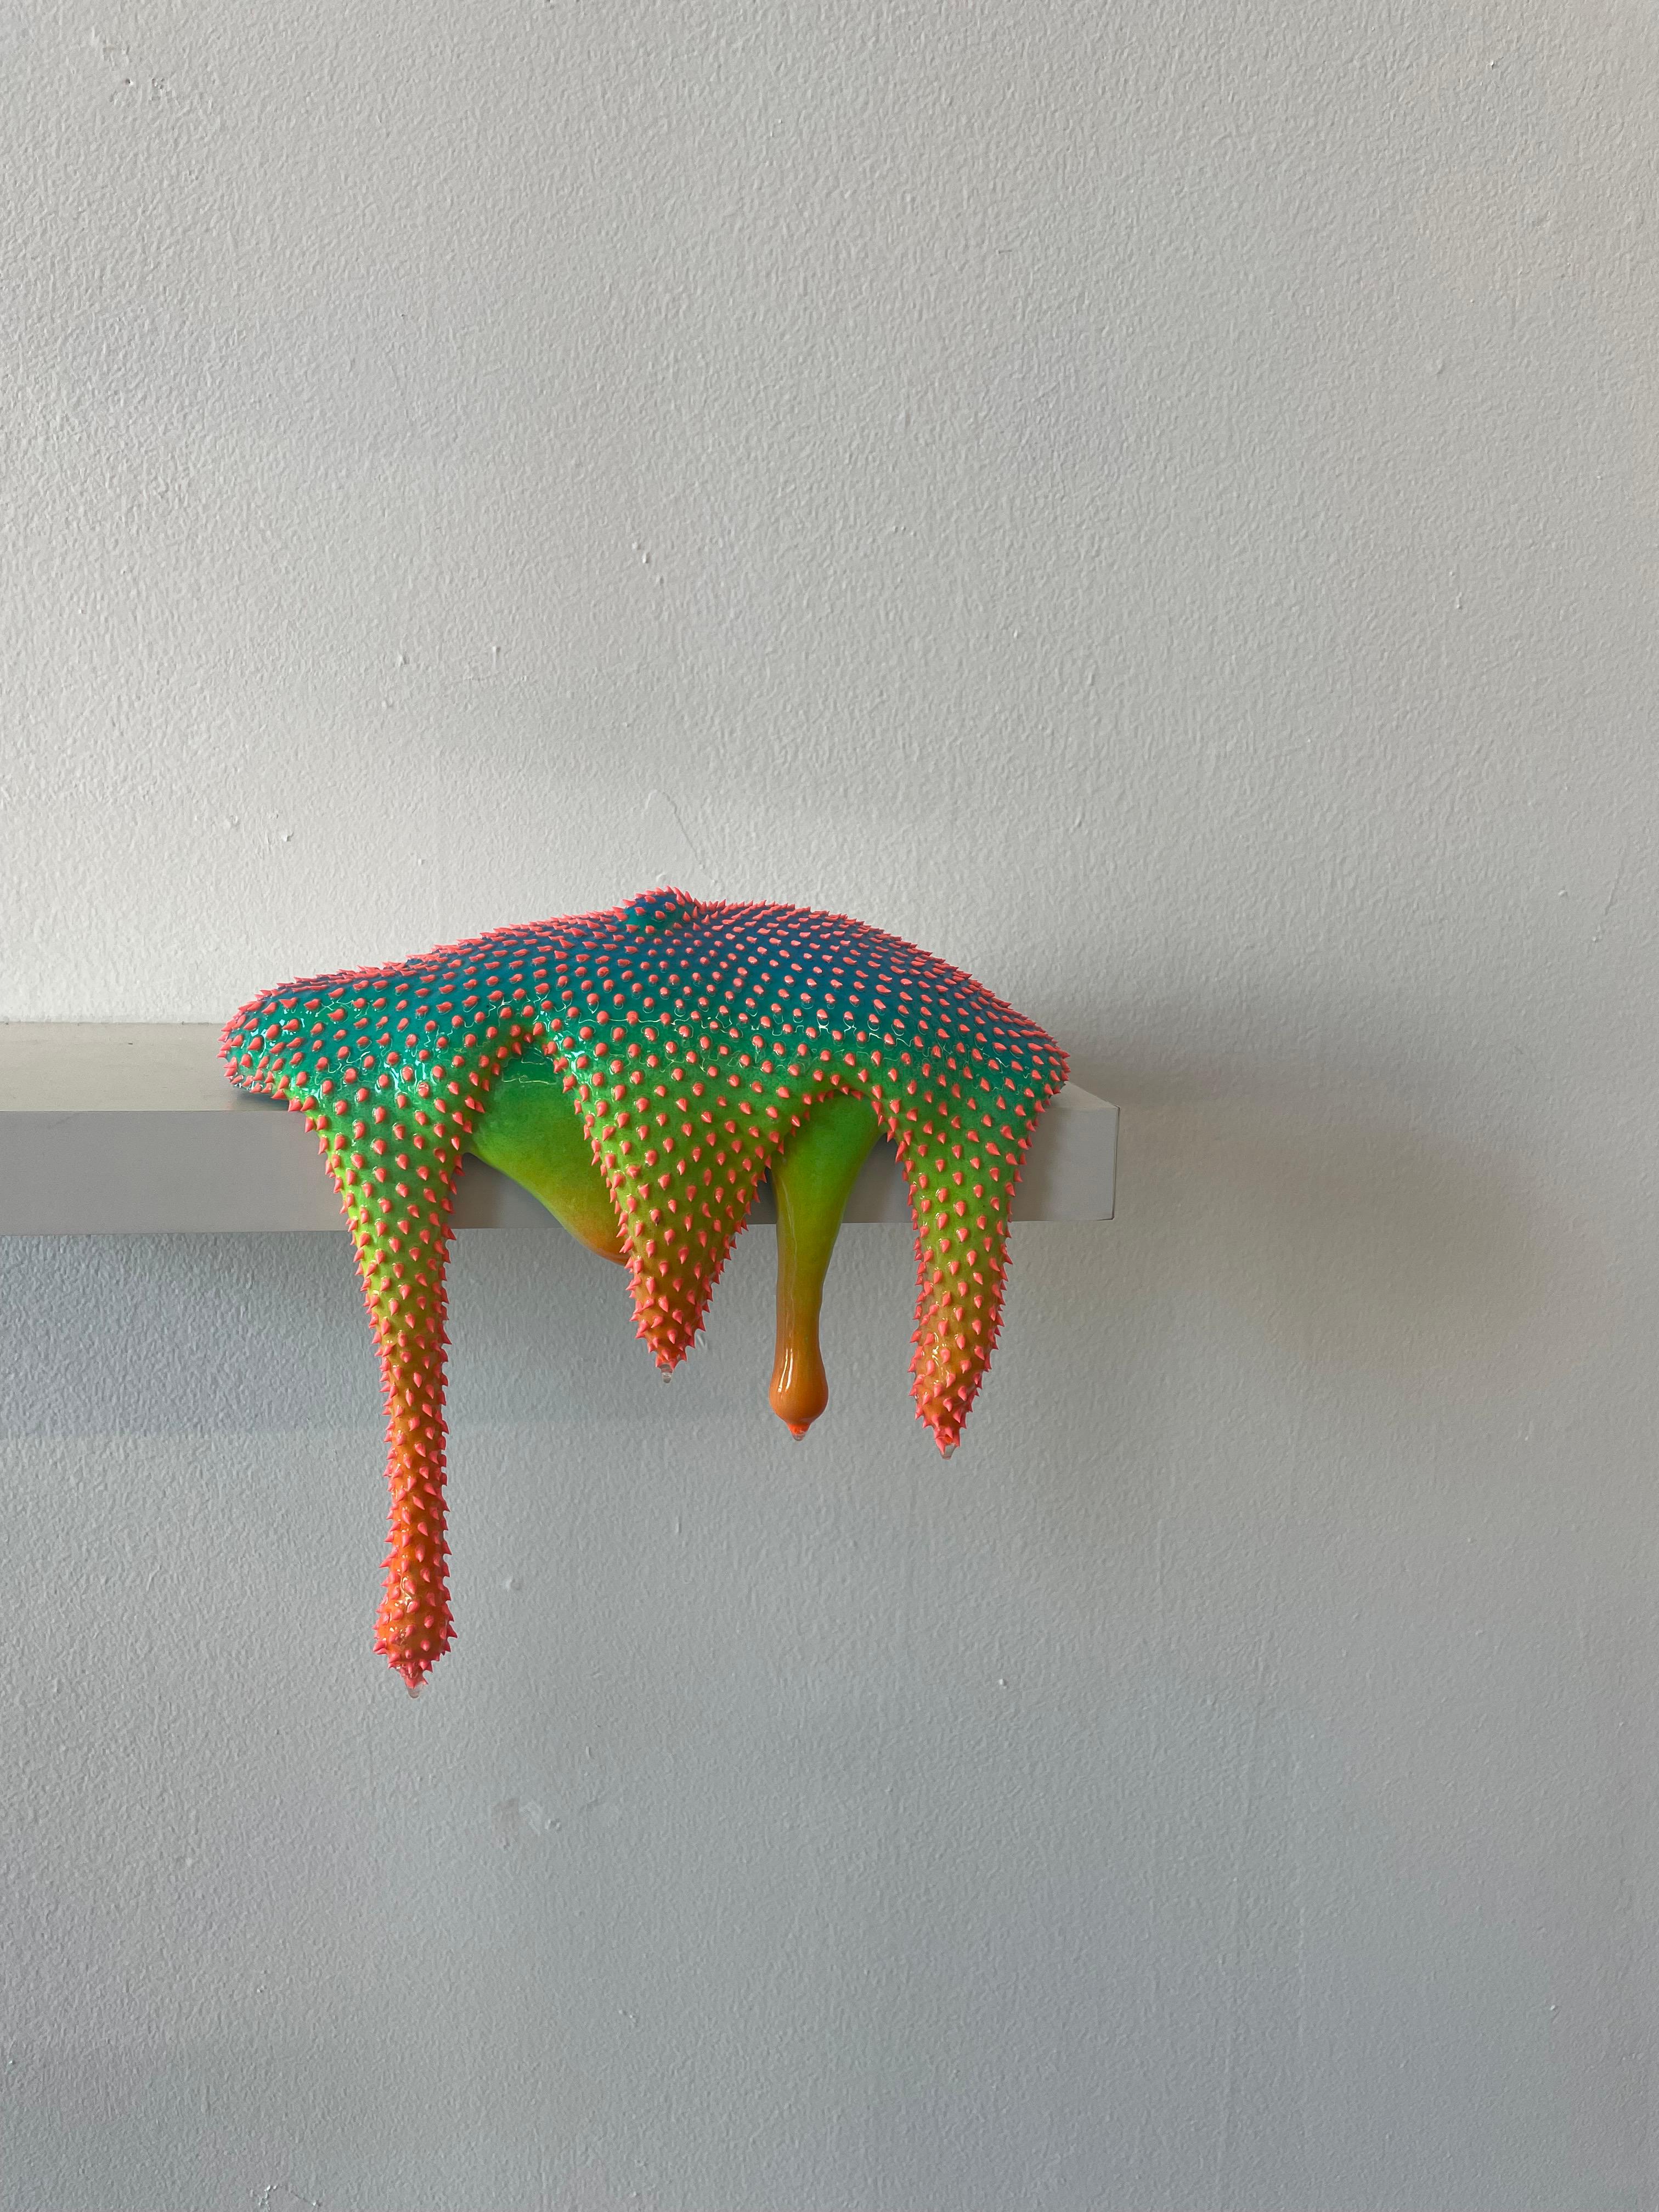 Drip - Sculpture by Dan Lam